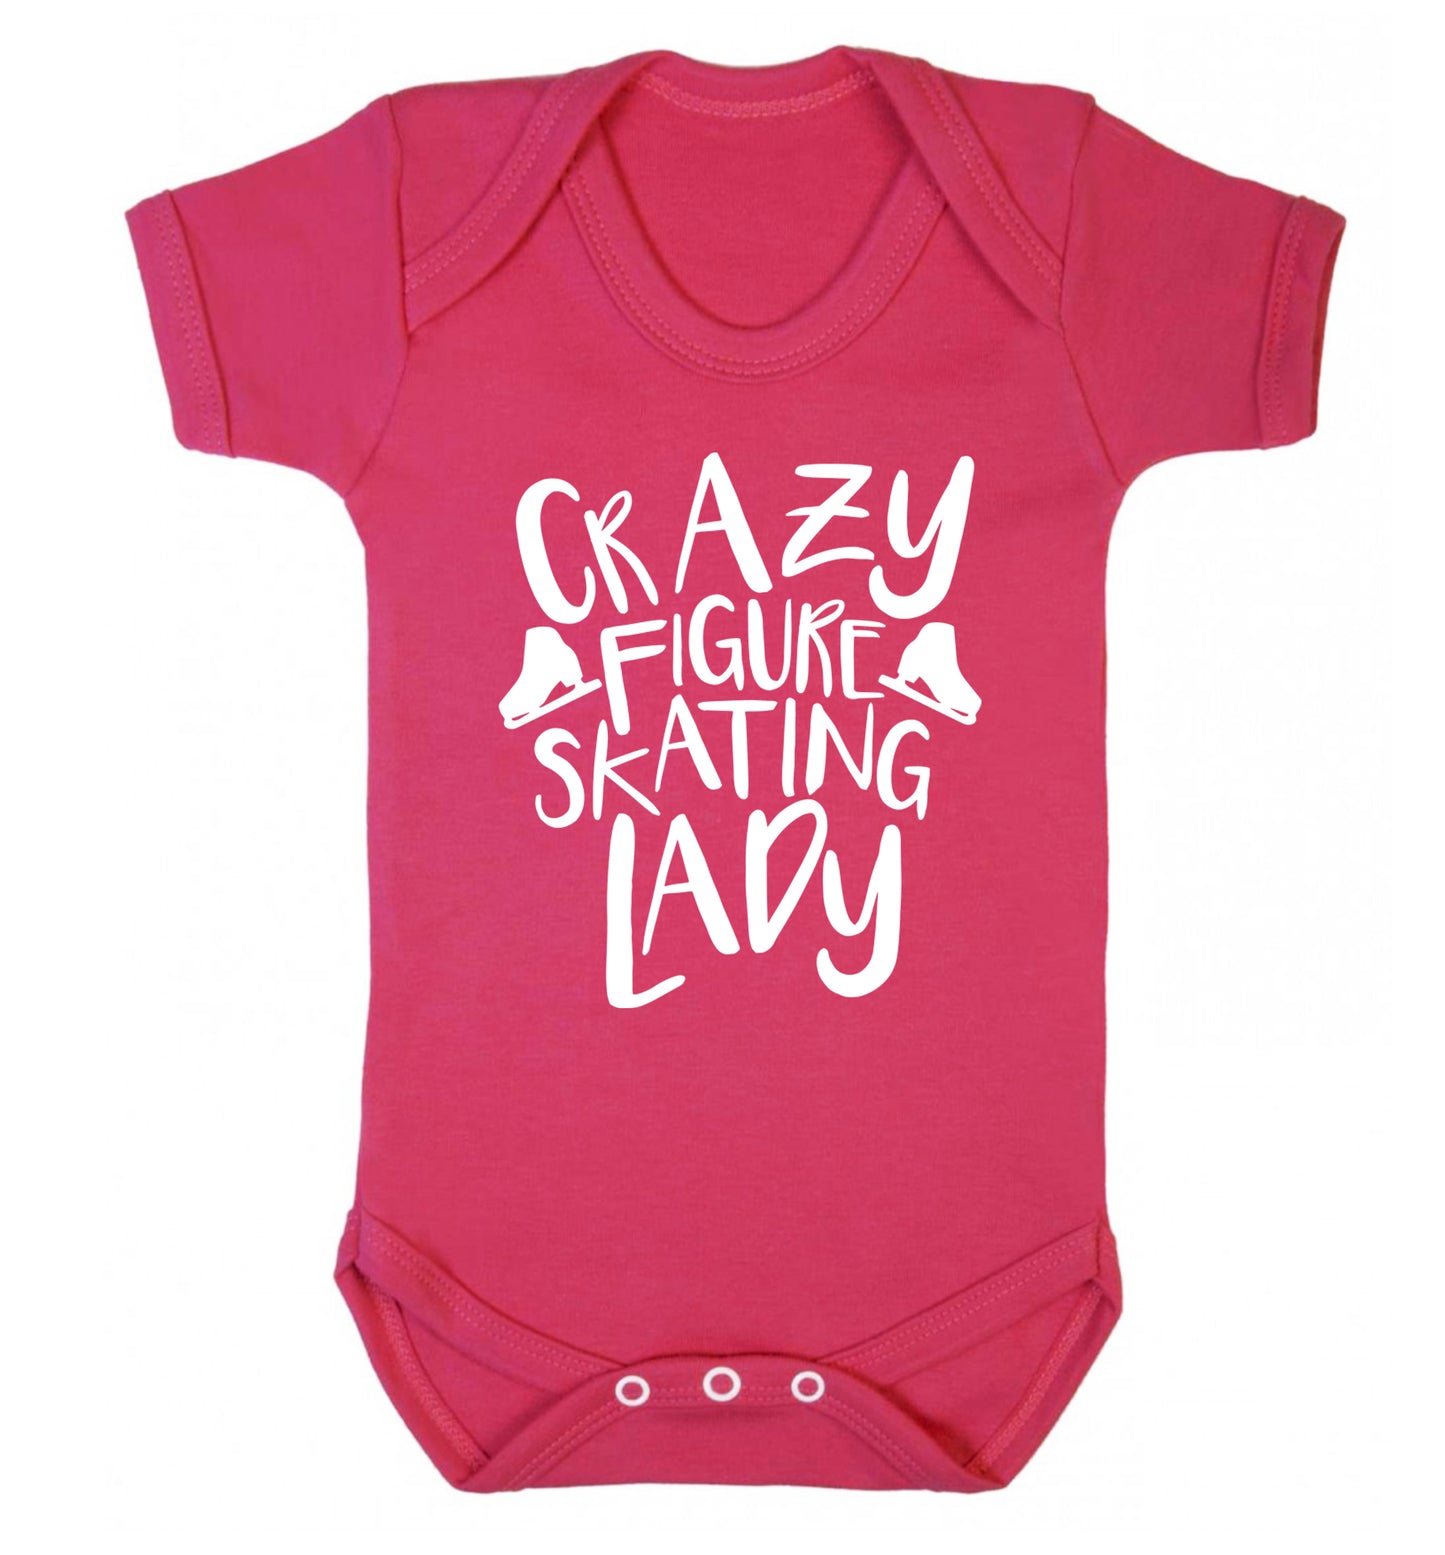 Crazy figure skating lady Baby Vest dark pink 18-24 months